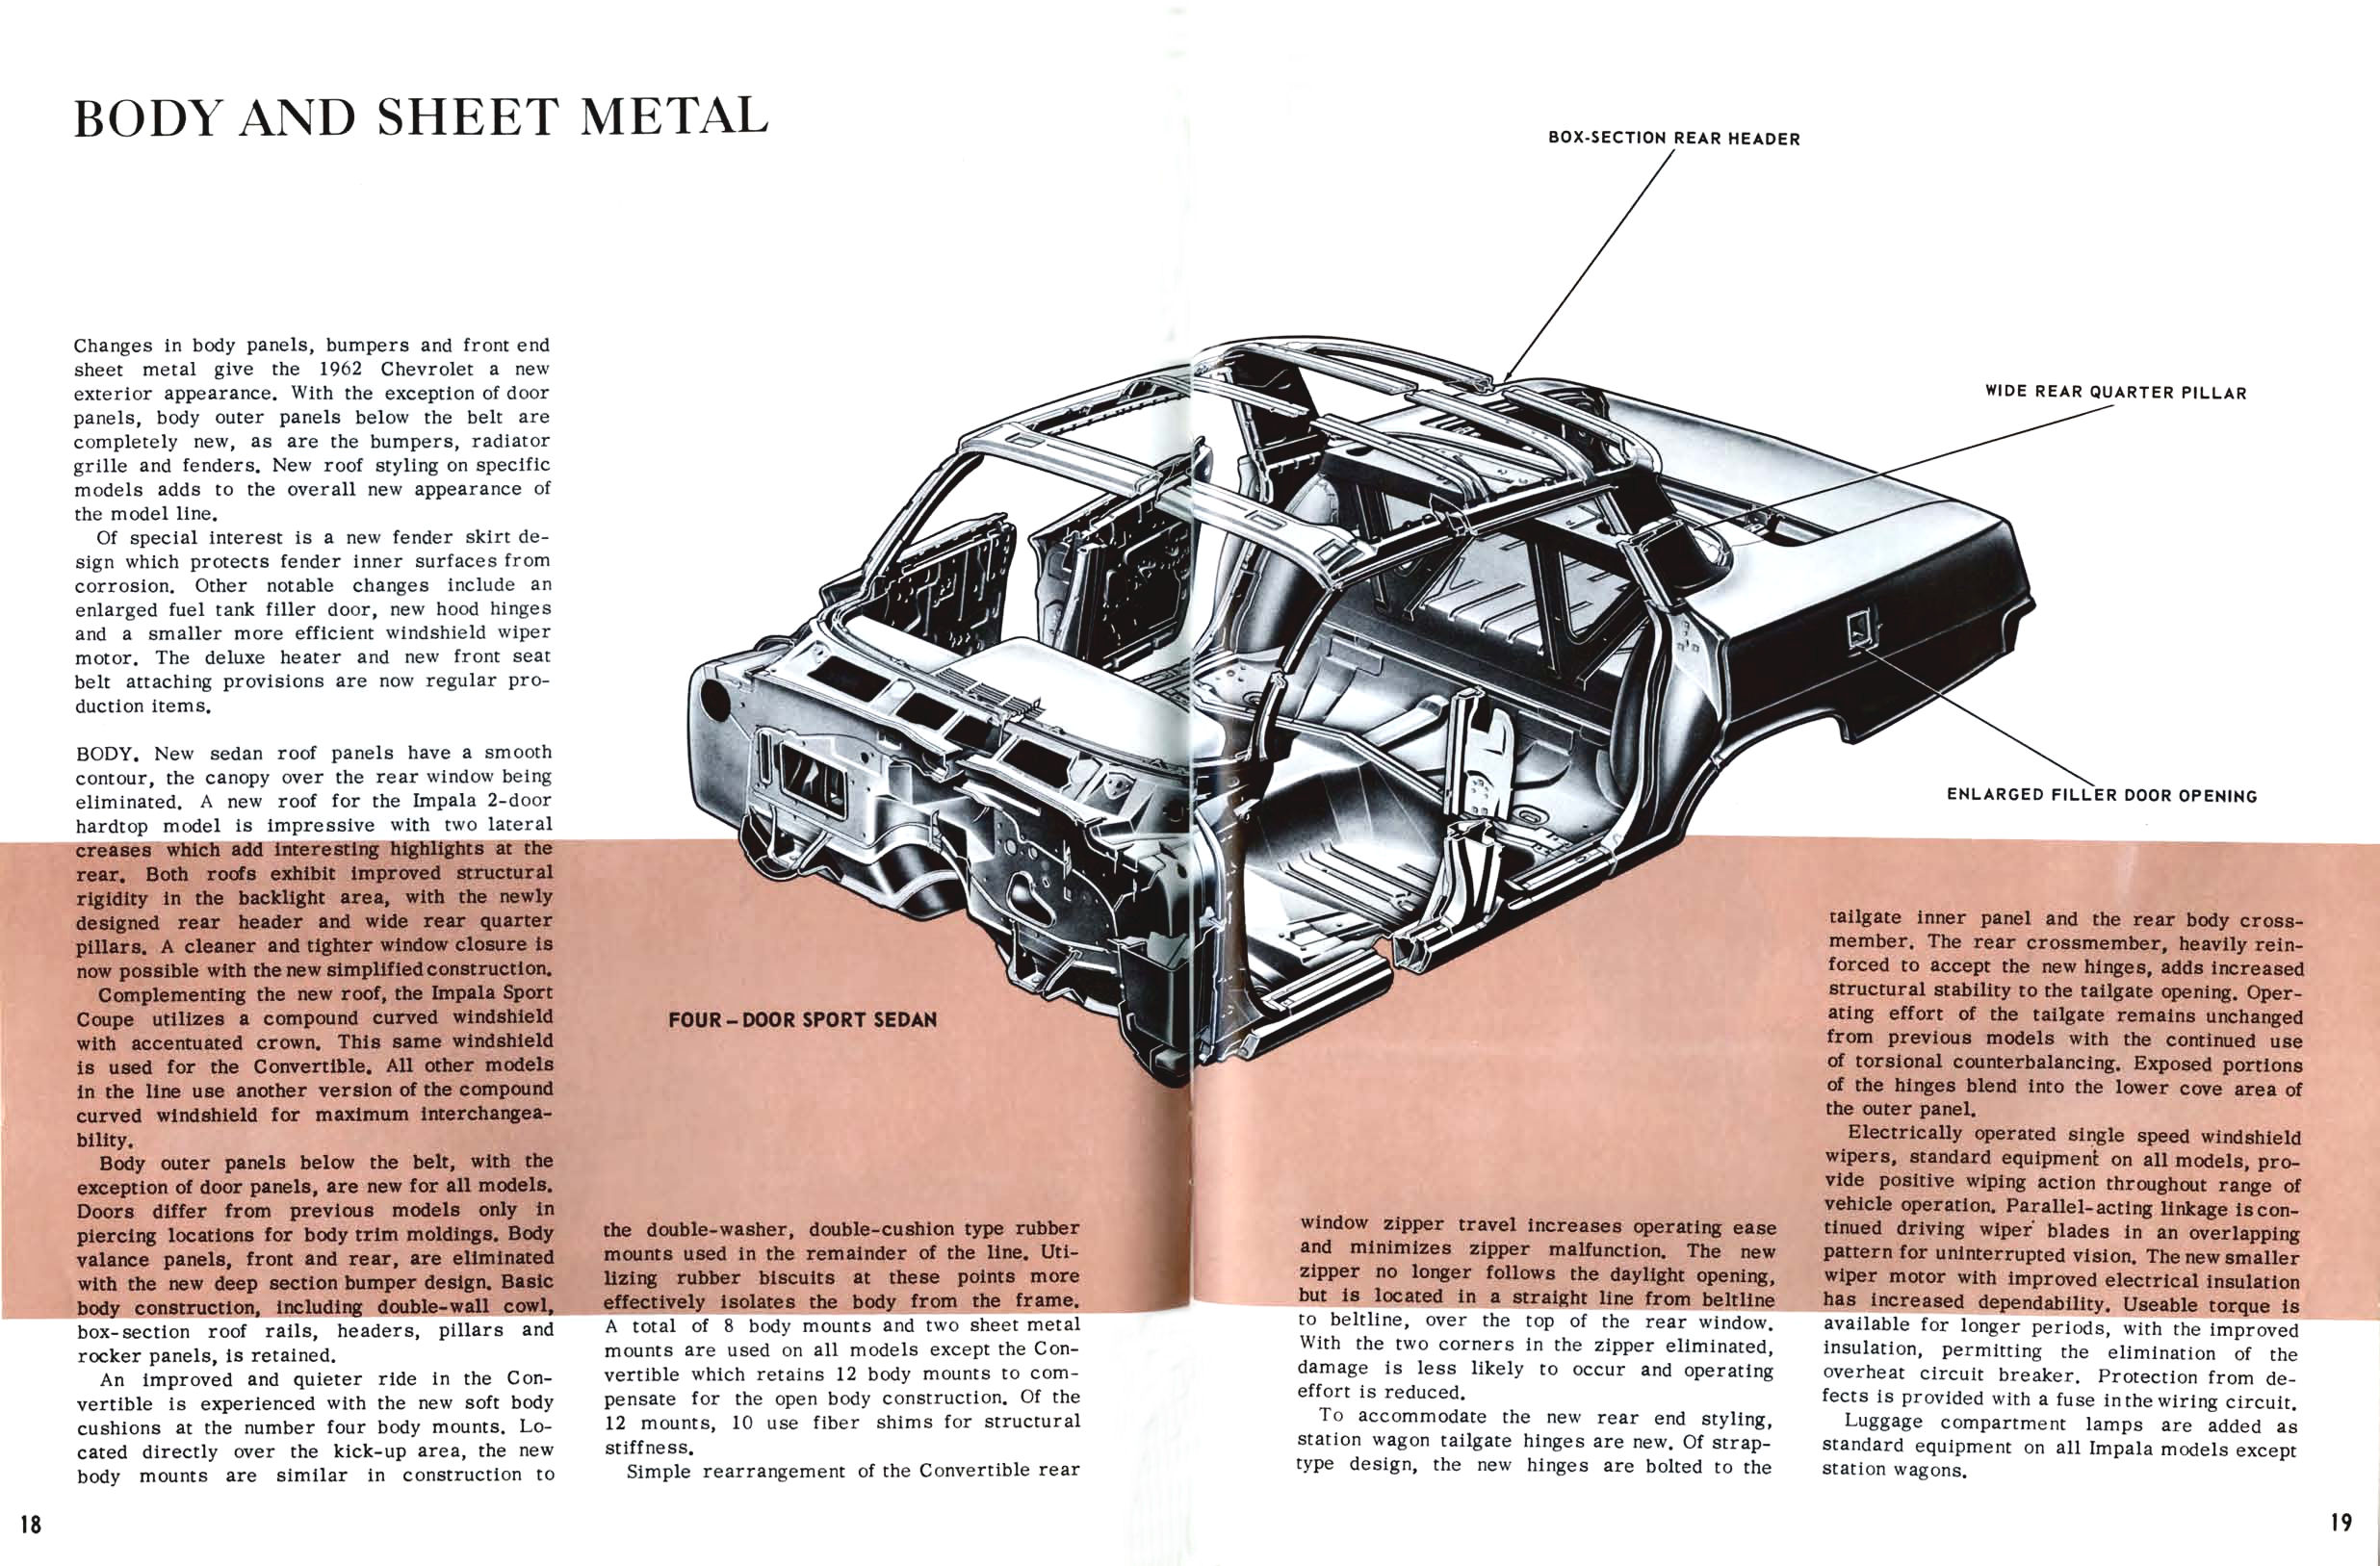 1962_Chevrolet_Engineering_Features-18-19